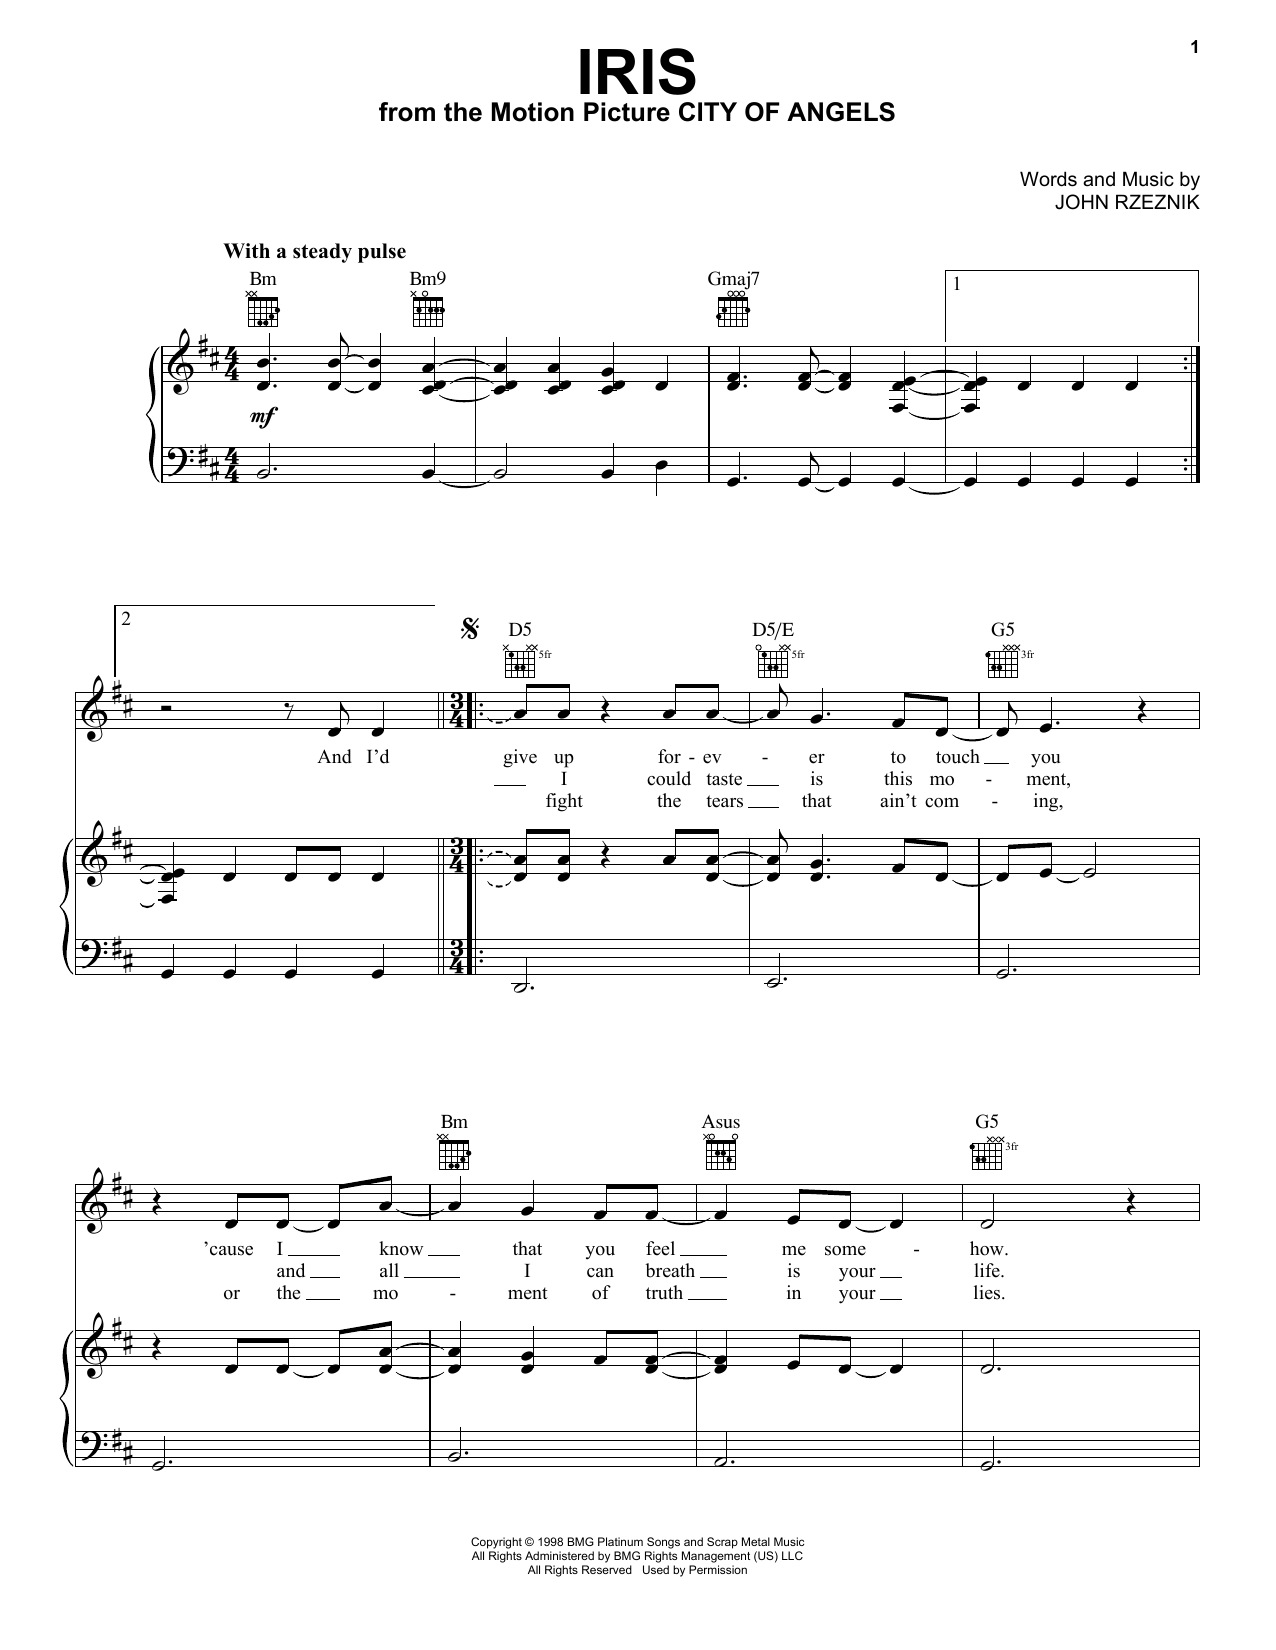 Goo Goo Dolls Iris Sheet Music Notes & Chords for Ukulele with strumming patterns - Download or Print PDF